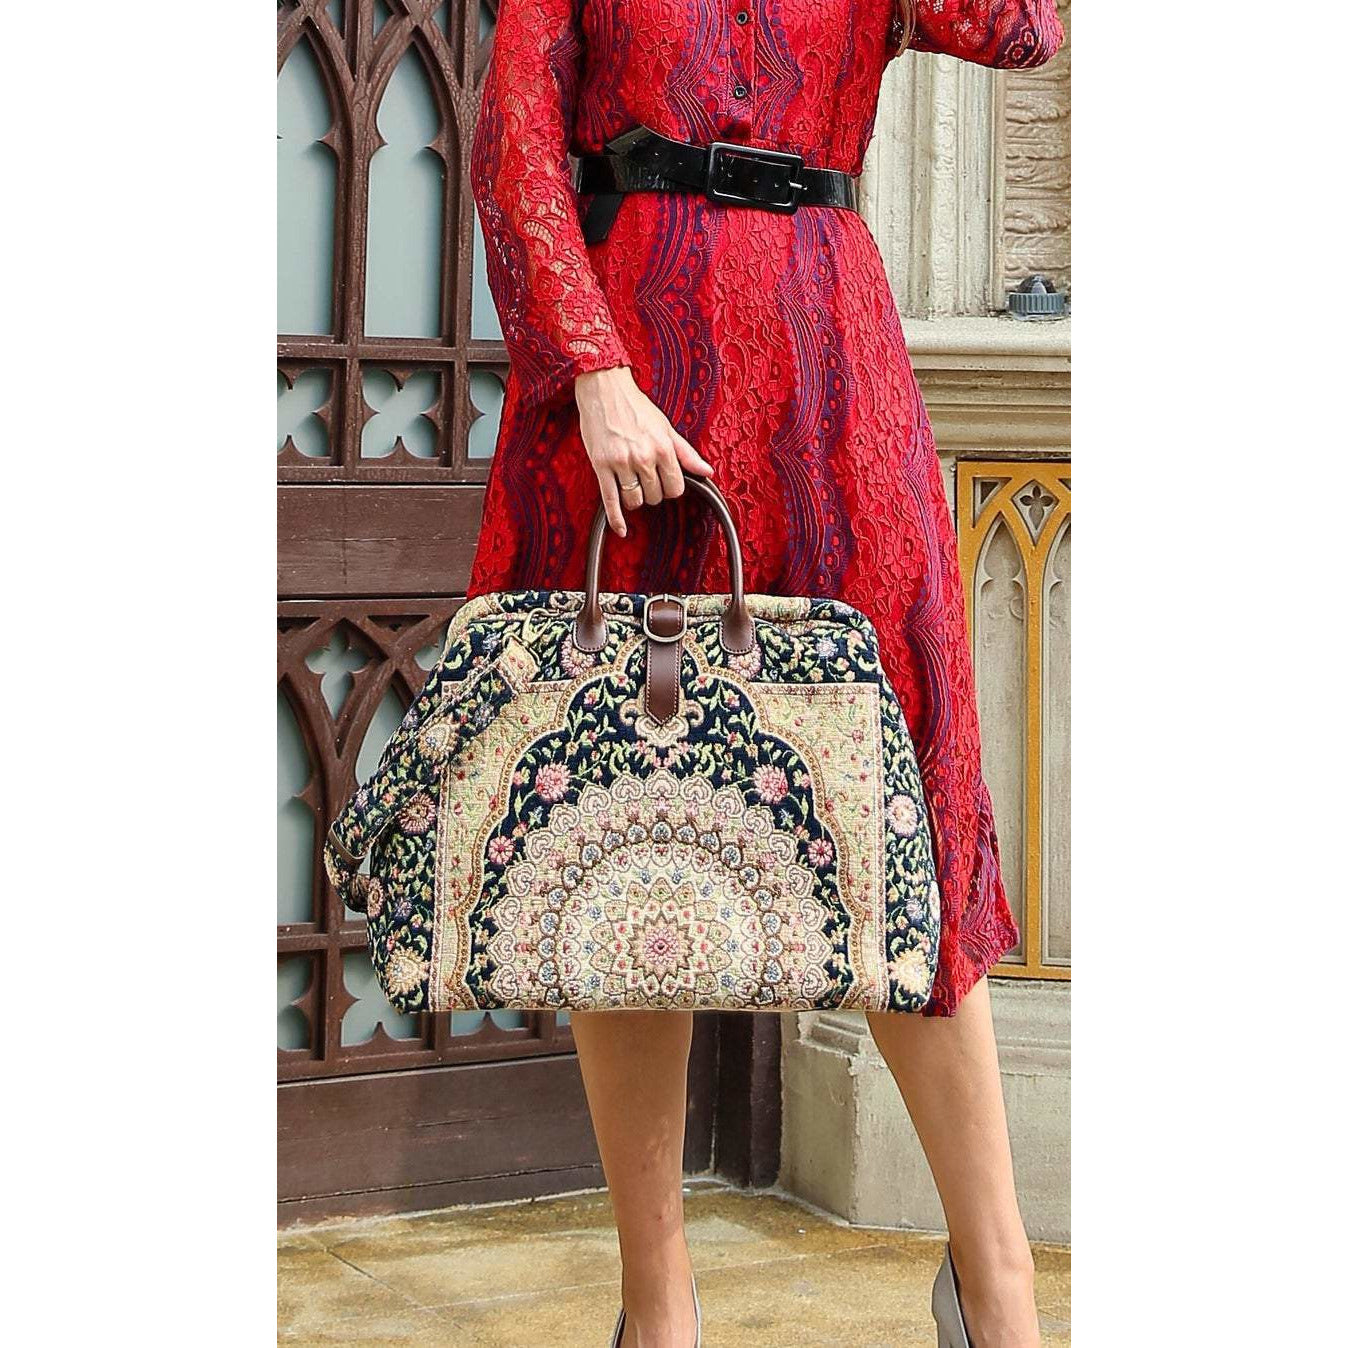 Mary Poppins Carpet Bag Oriental Navy